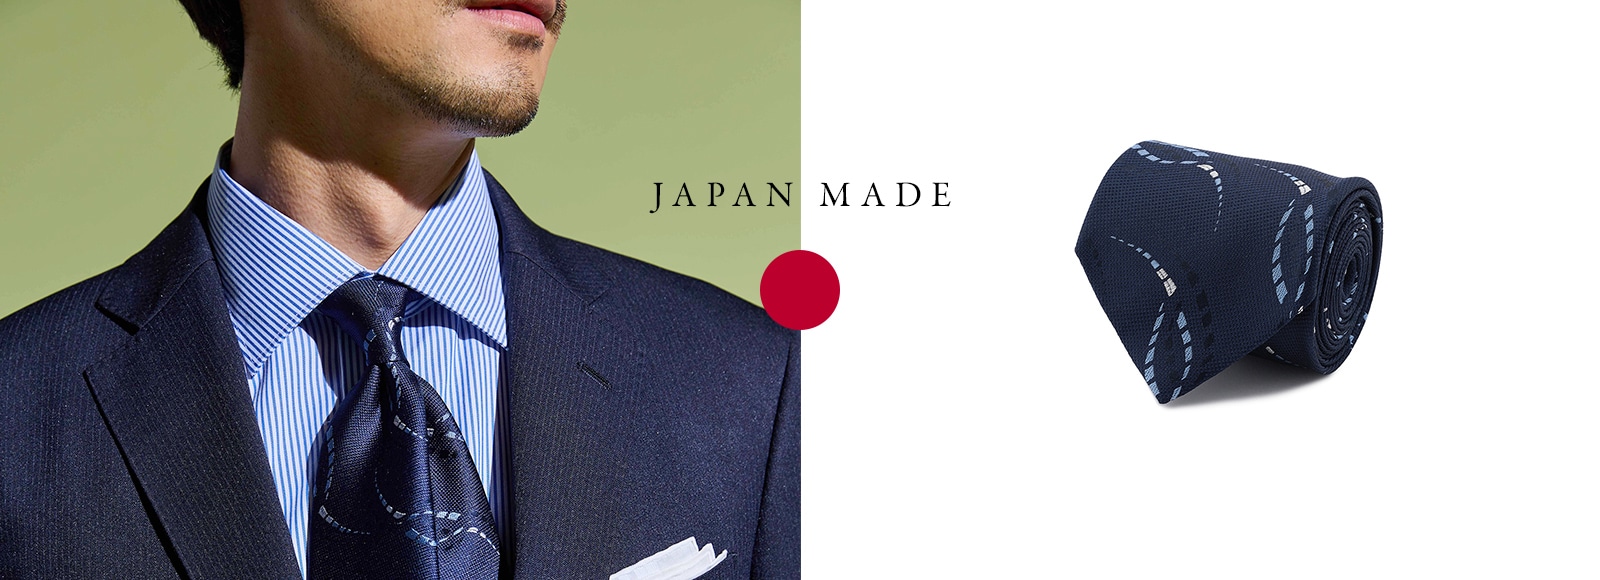 Japan Made